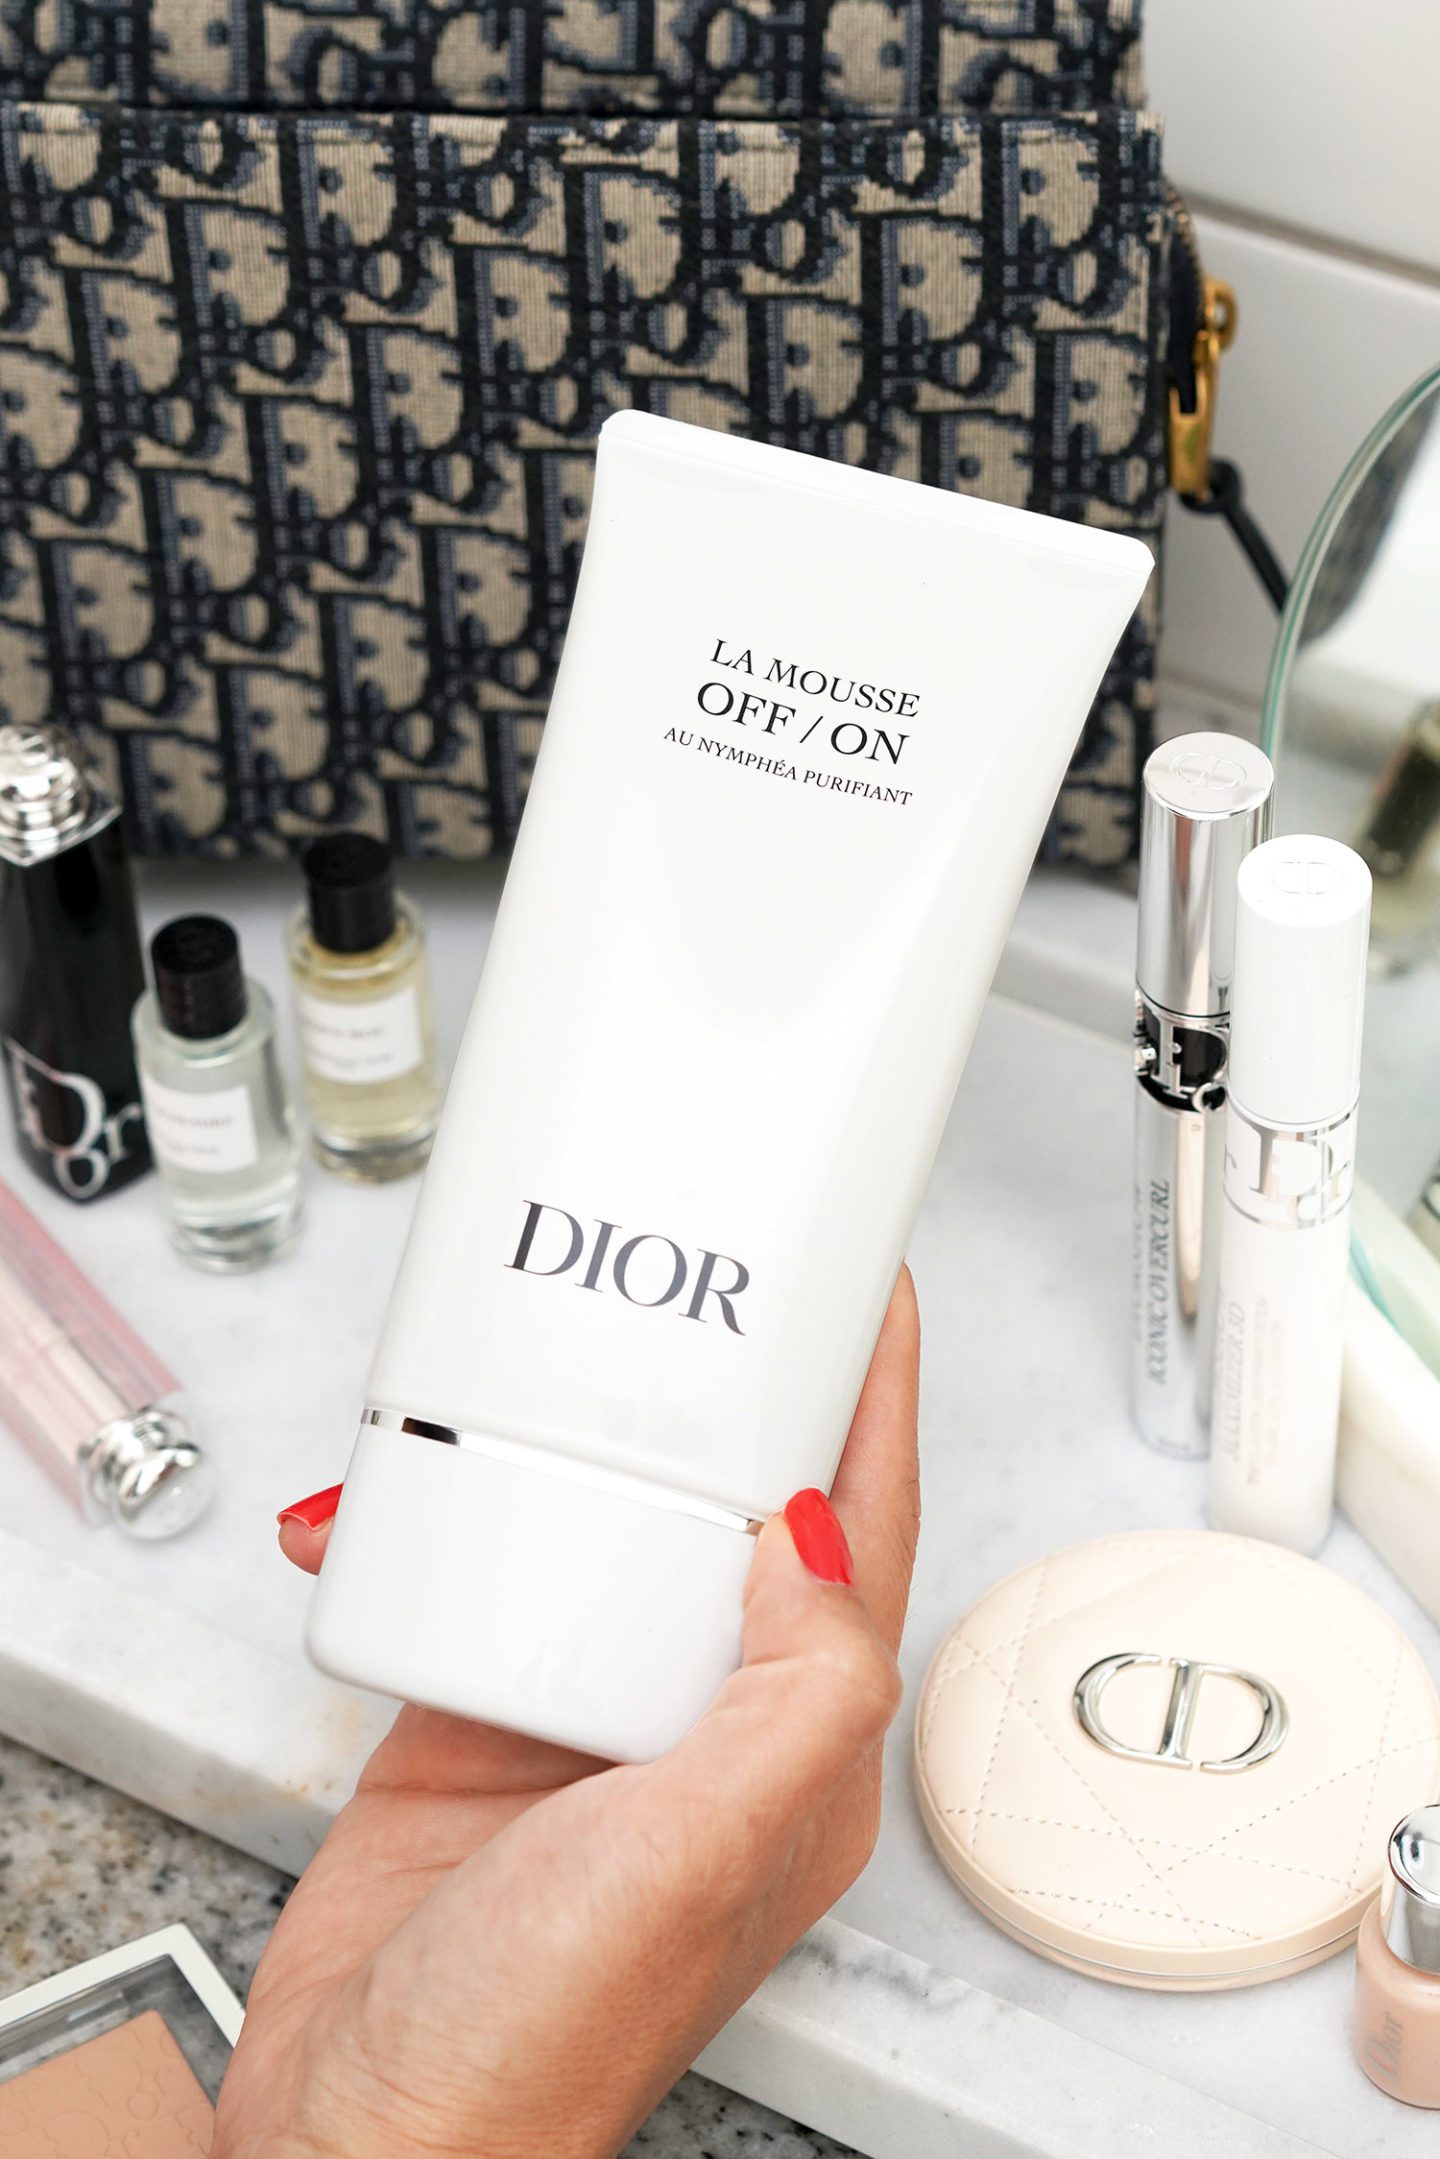 Dior La Mousse OFF/ON Foaming Face Cleanser 